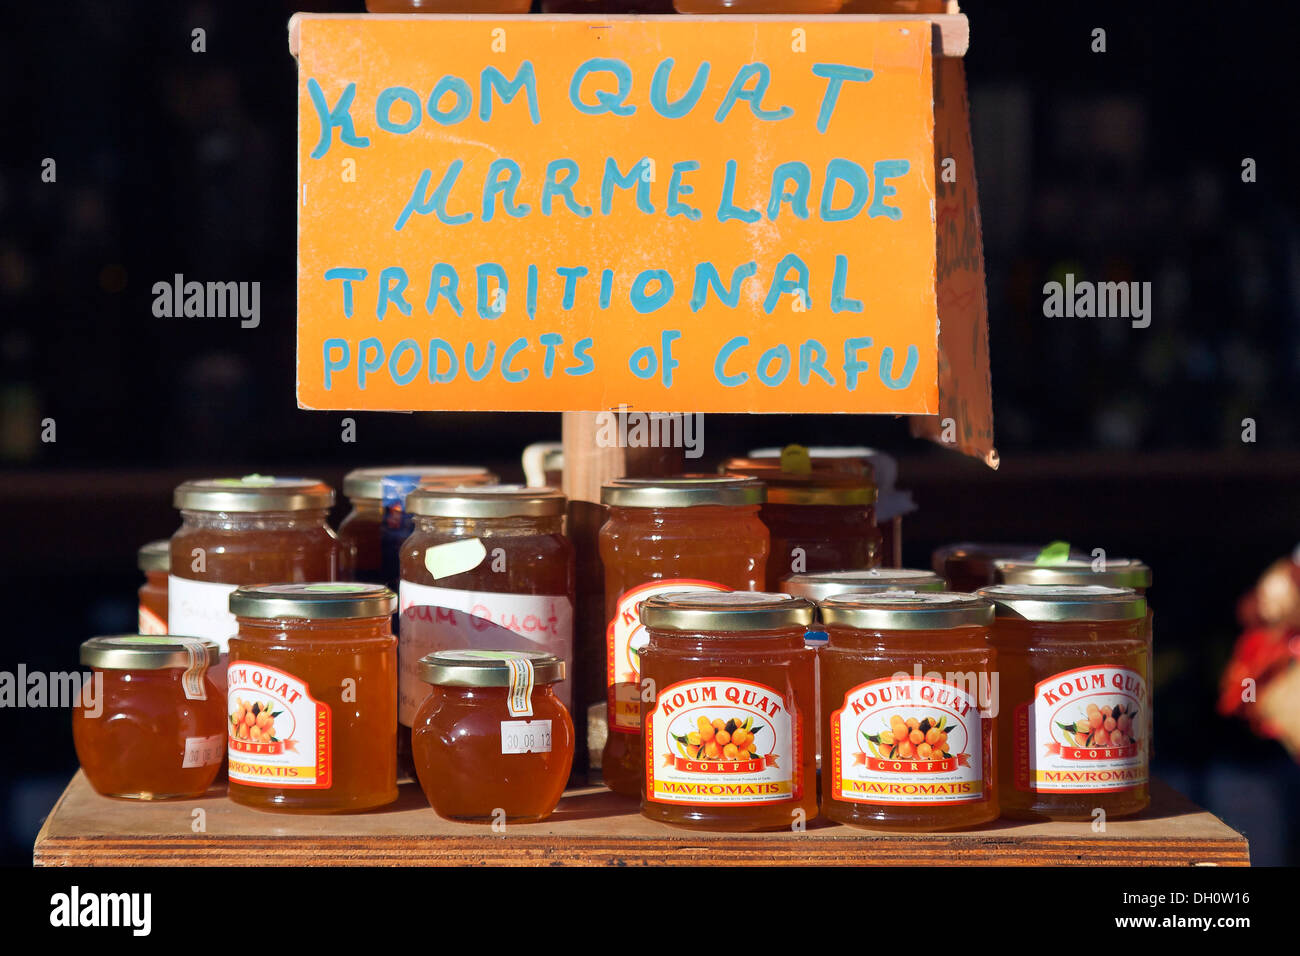 Kumquat marmalade, also known as Koum Quat, typical souvenirs, Corfu Island, Ionian Islands, Greece, Southern Europe, Europe Stock Photo